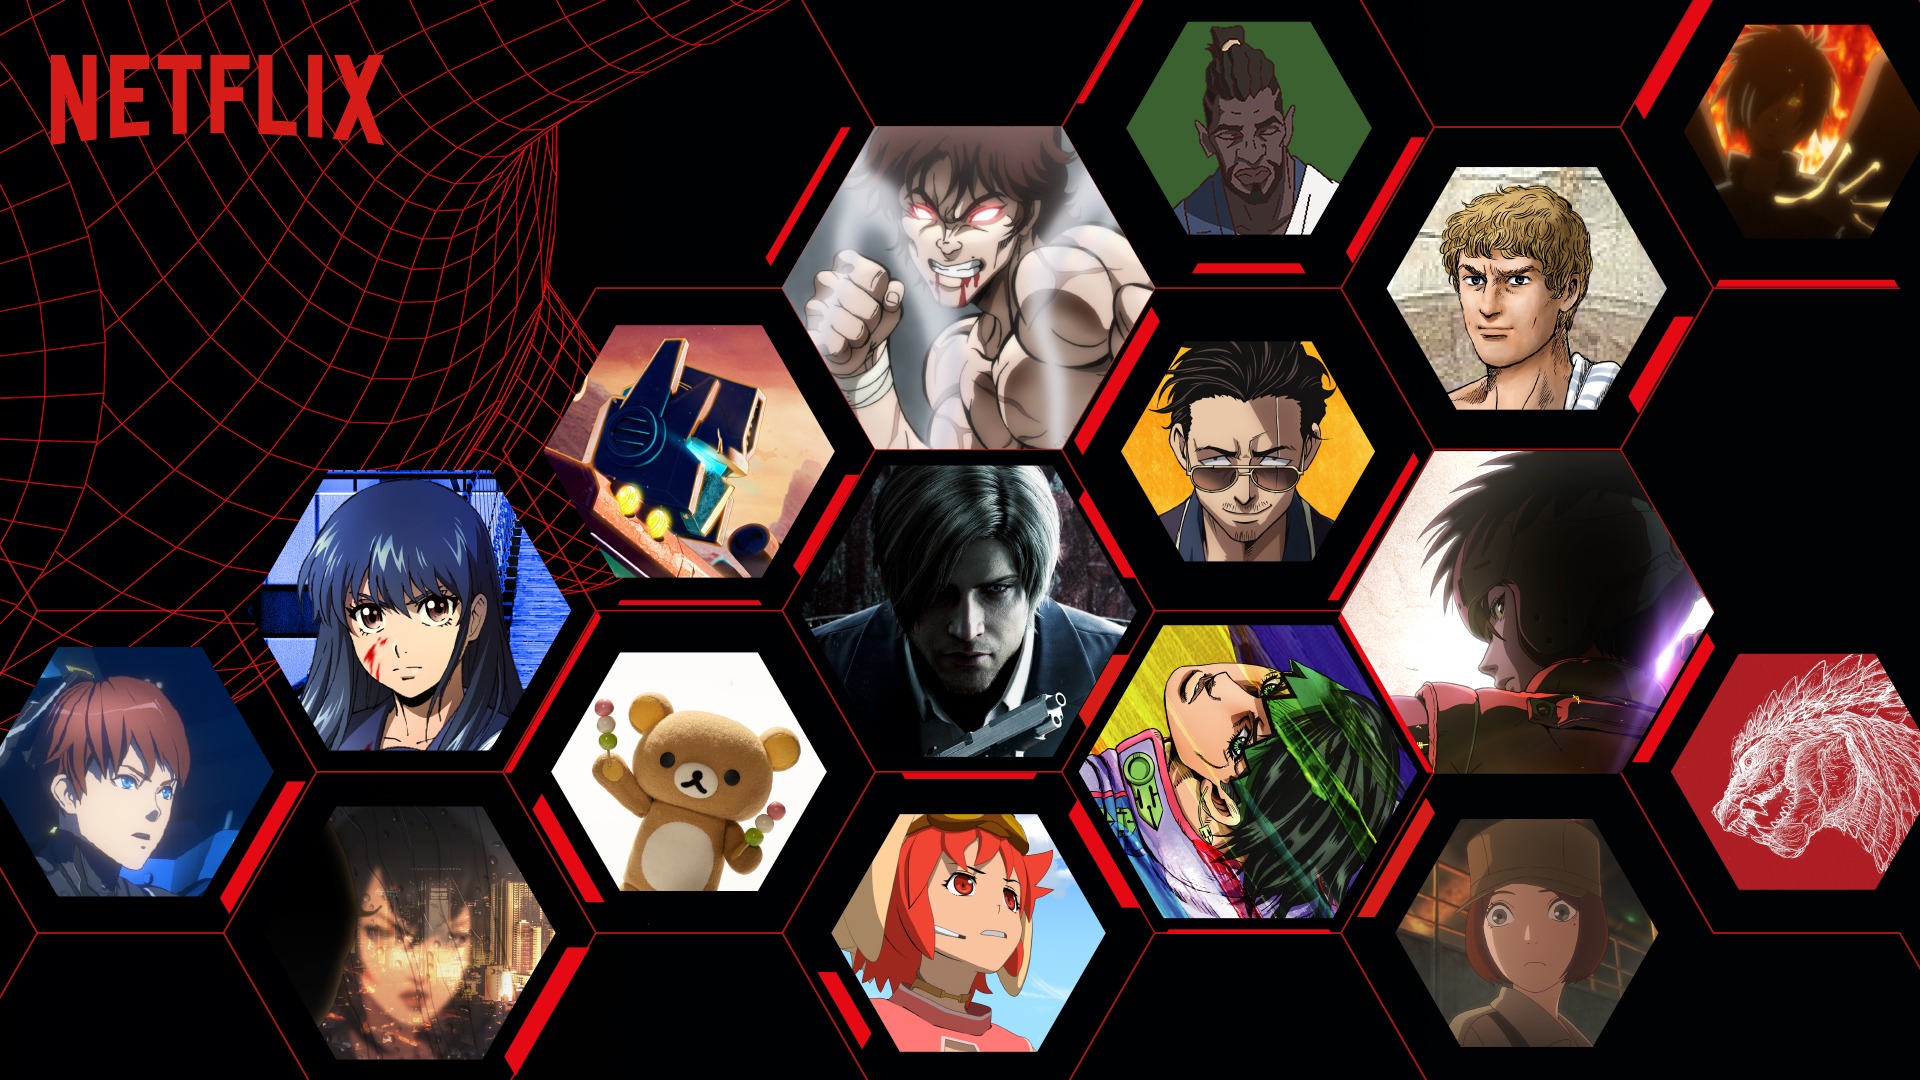 34 melhores Animes disponíveis na Netflix 2021 - NerdX Oficial